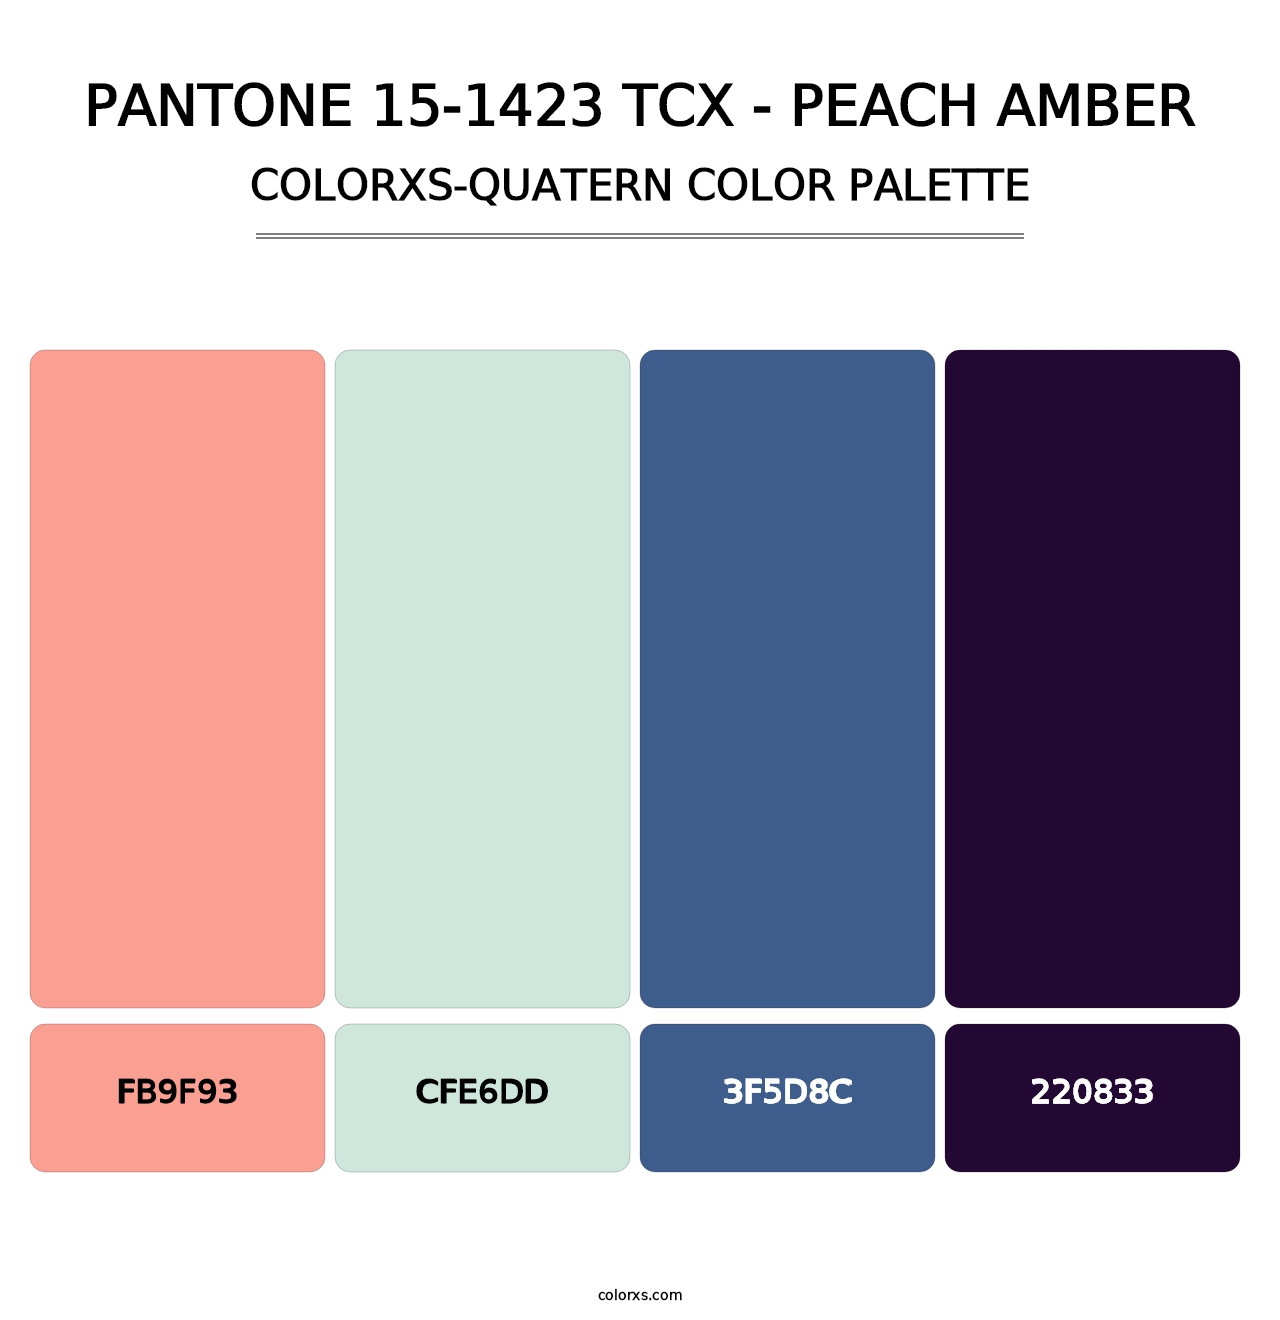 PANTONE 15-1423 TCX - Peach Amber - Colorxs Quatern Palette